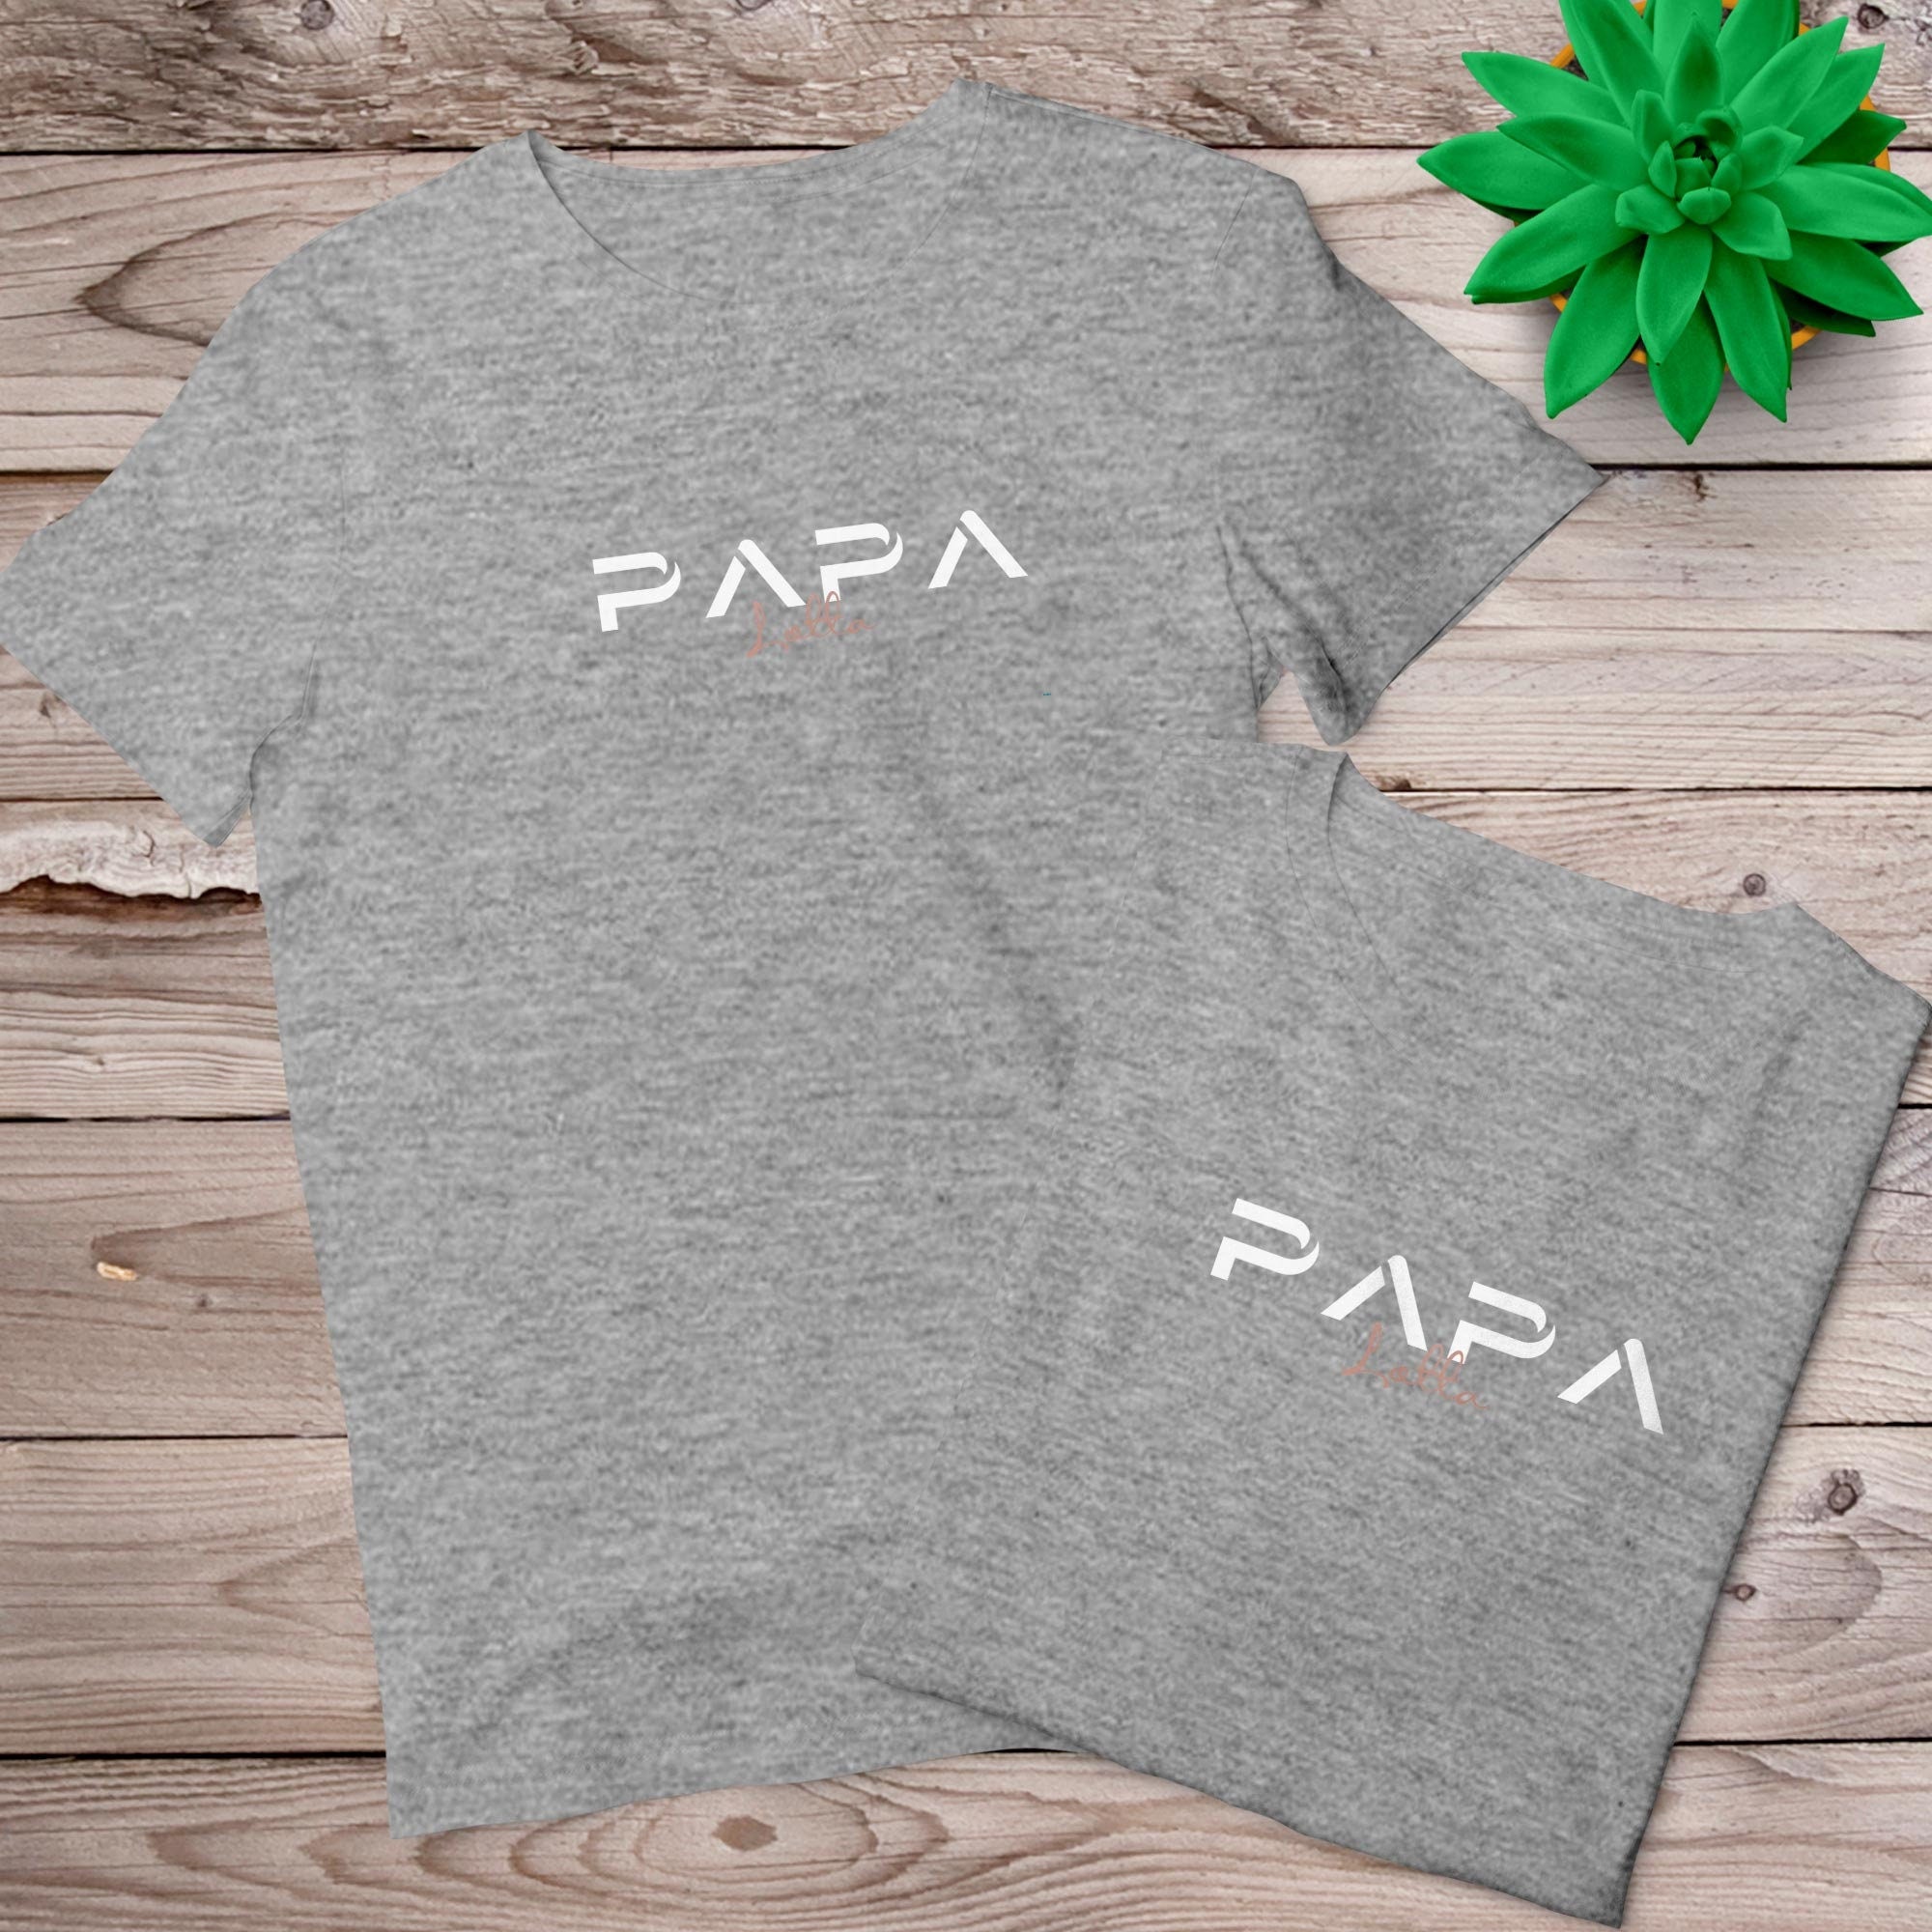 Papa I T-Shirt grau, personalisiert mit Namen